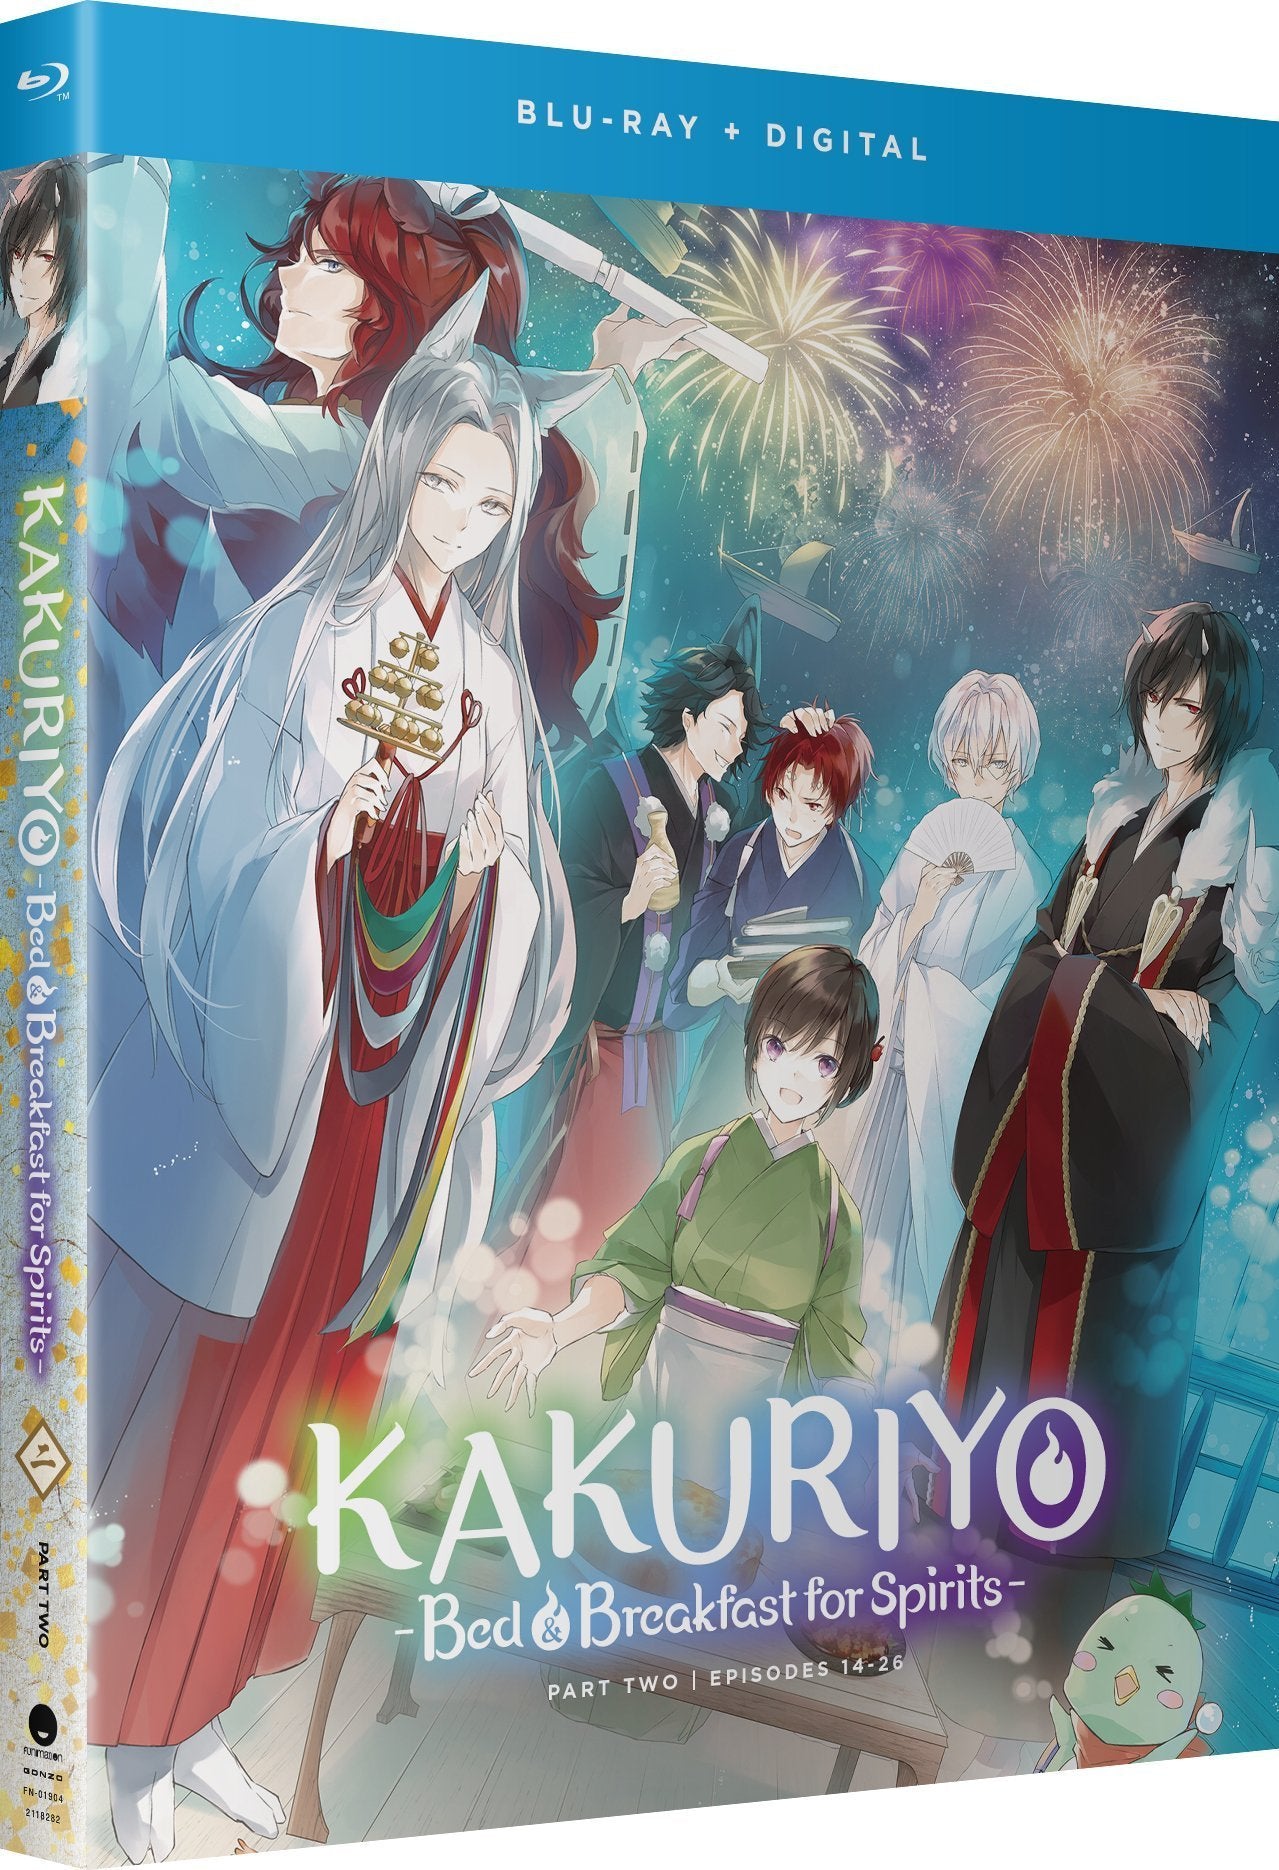 Kakuriyo Bed & Breakfast for Spirits - Season 1 Part 2 - Blu-ray image count 1